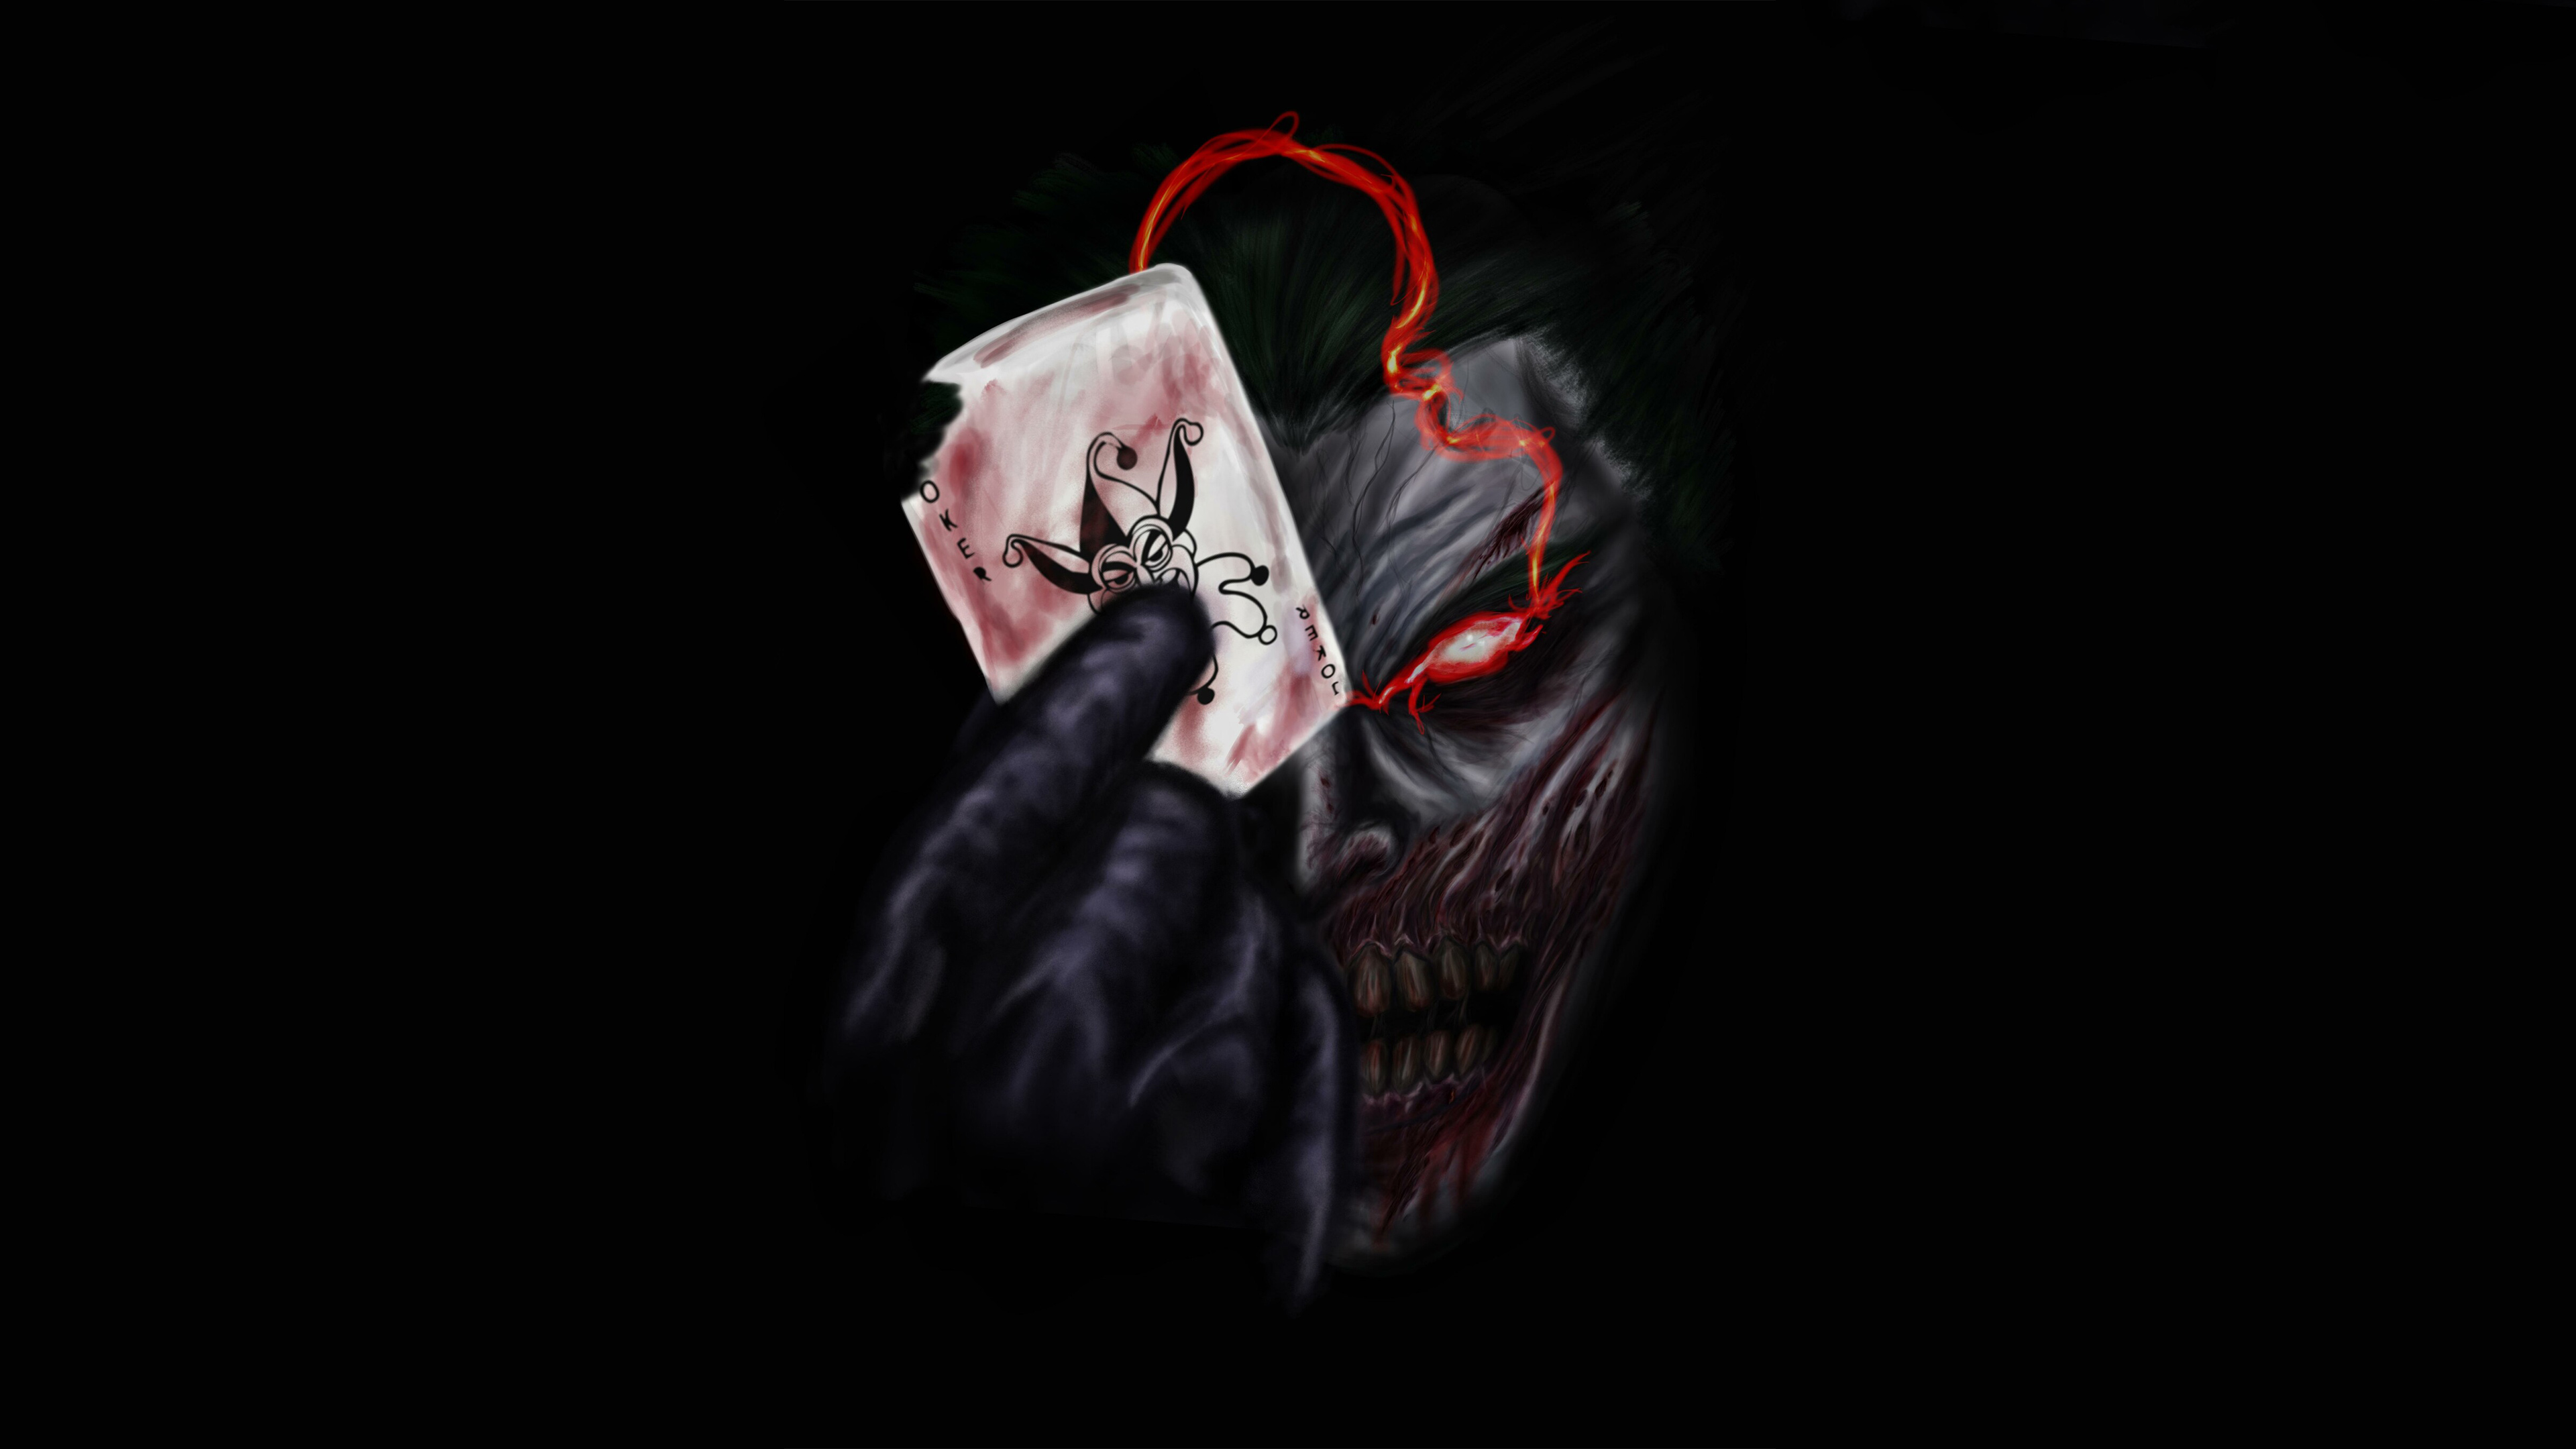 Hd Wallpaper K Of Joker Joker Cyberpunk K Hd Superheroes K Wallpapers Images Backgrounds